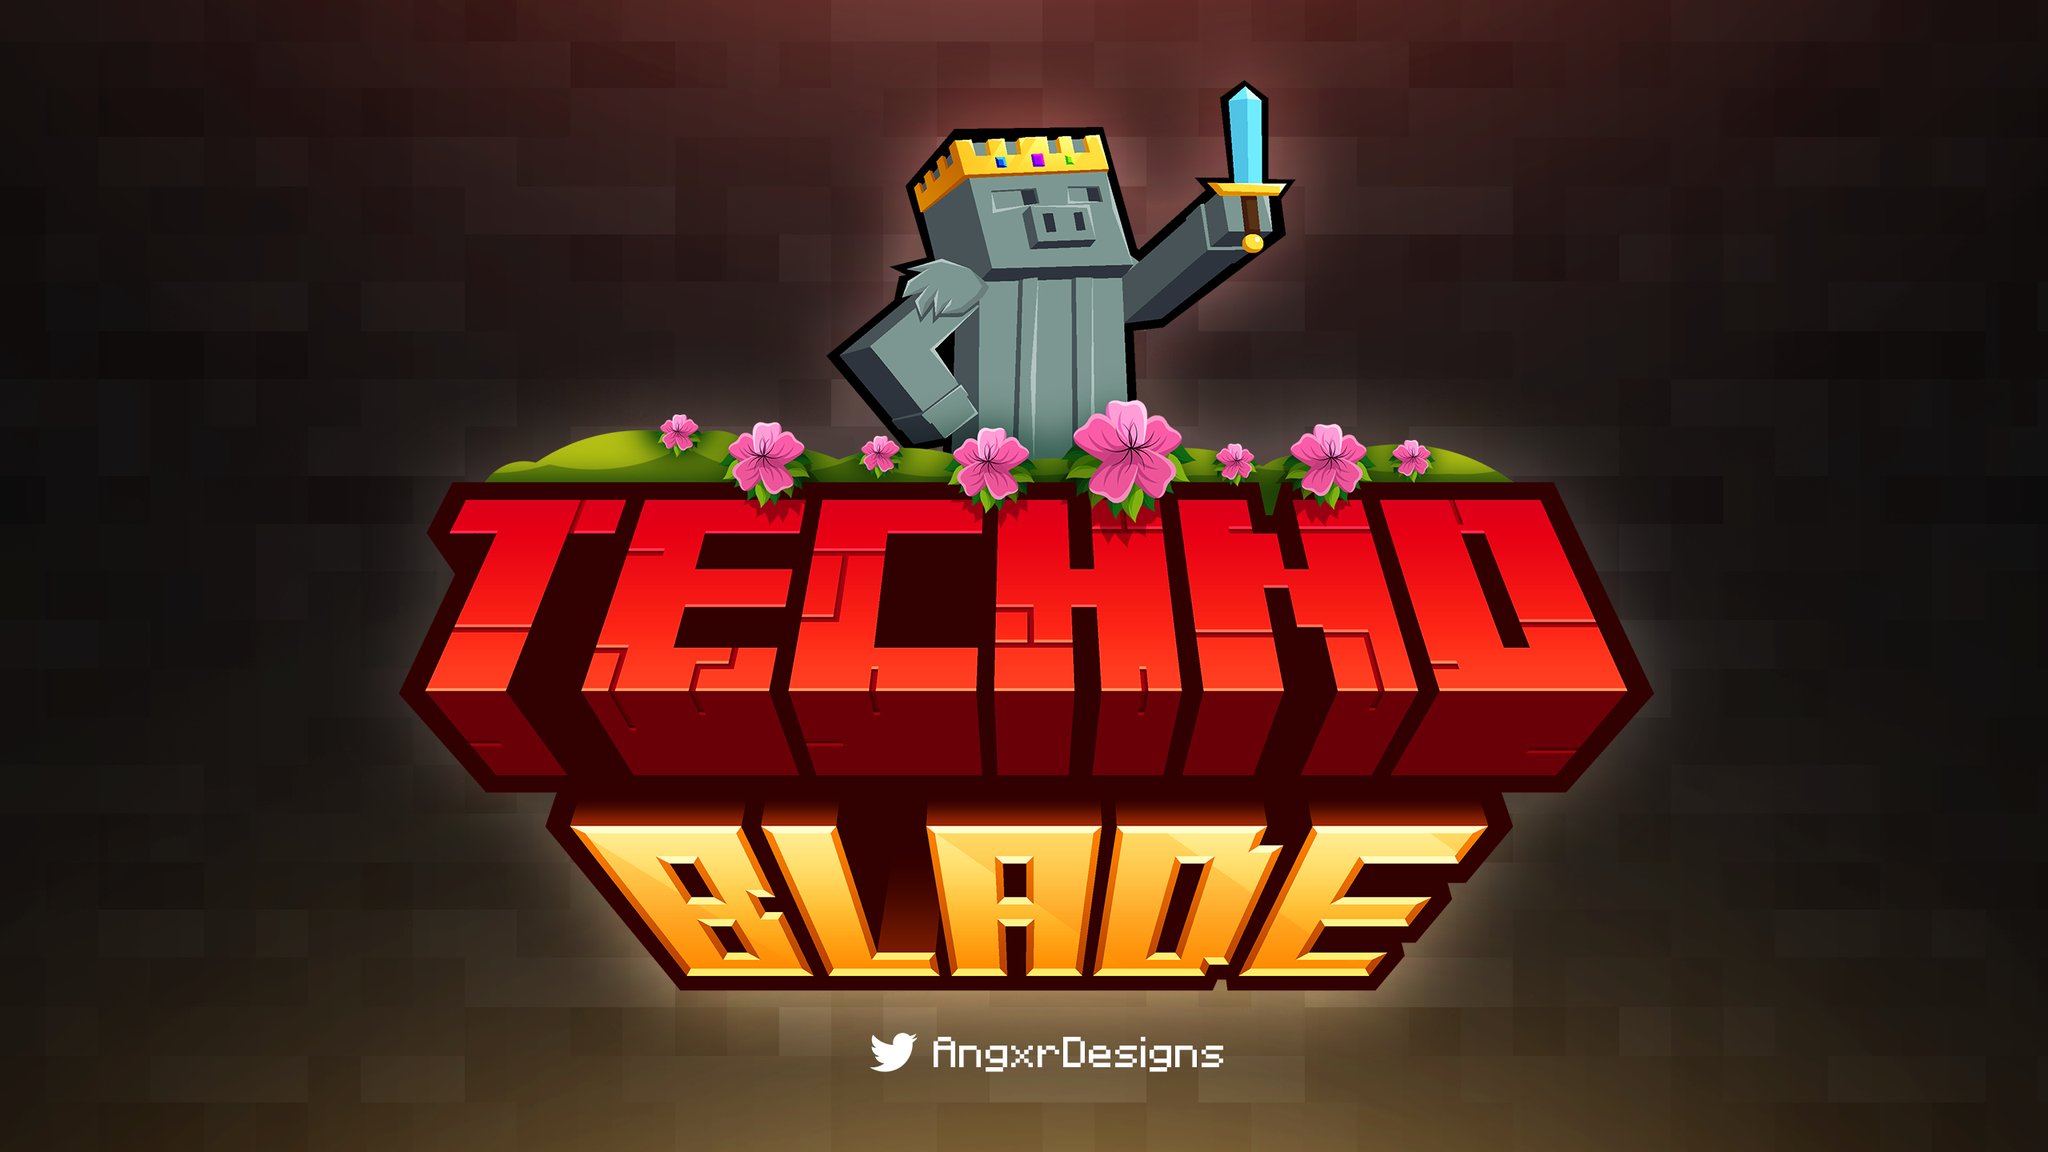 Technoblade Never Dies!” Splash text add to Minecraft by Mojang 🐷 👑, Technoblade